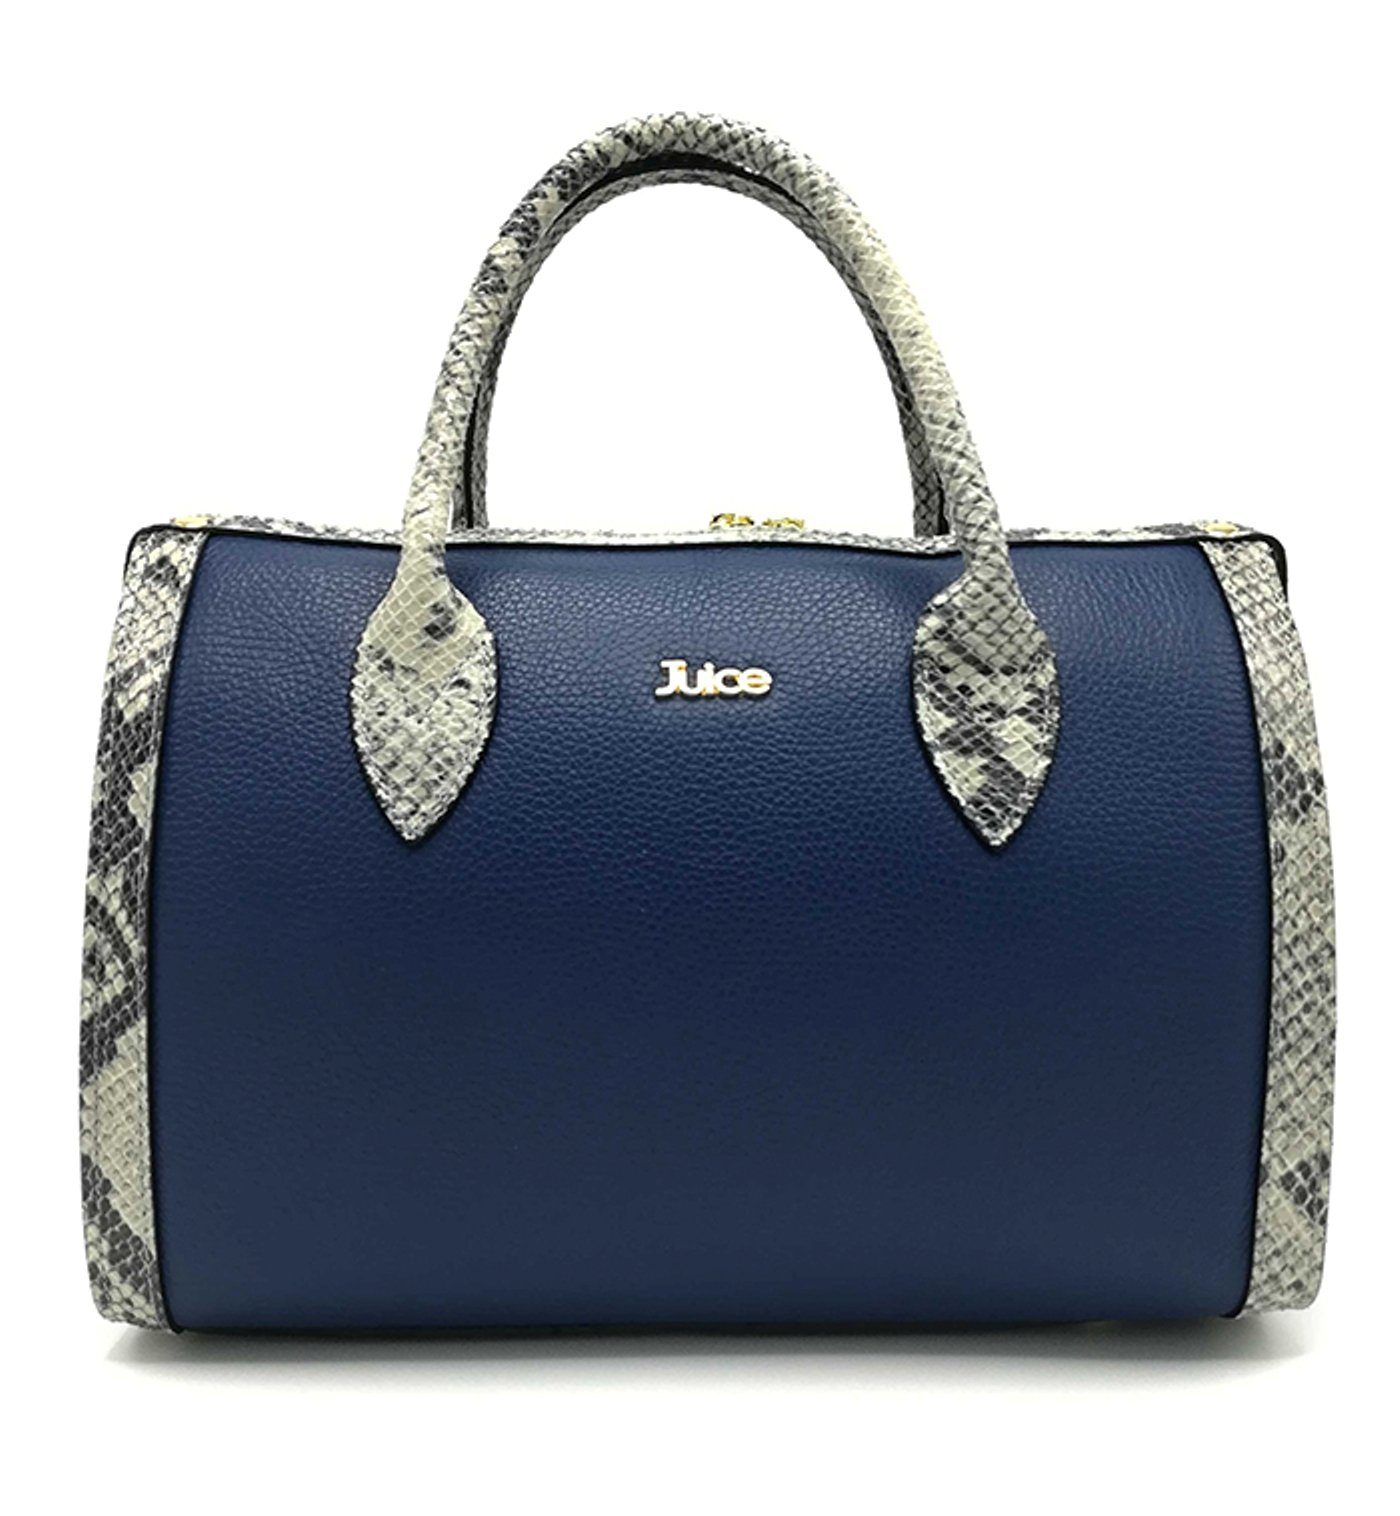 Ava & Jackson Company Handtasche VIVIANA, echtes Leder made in Italy blau-beige